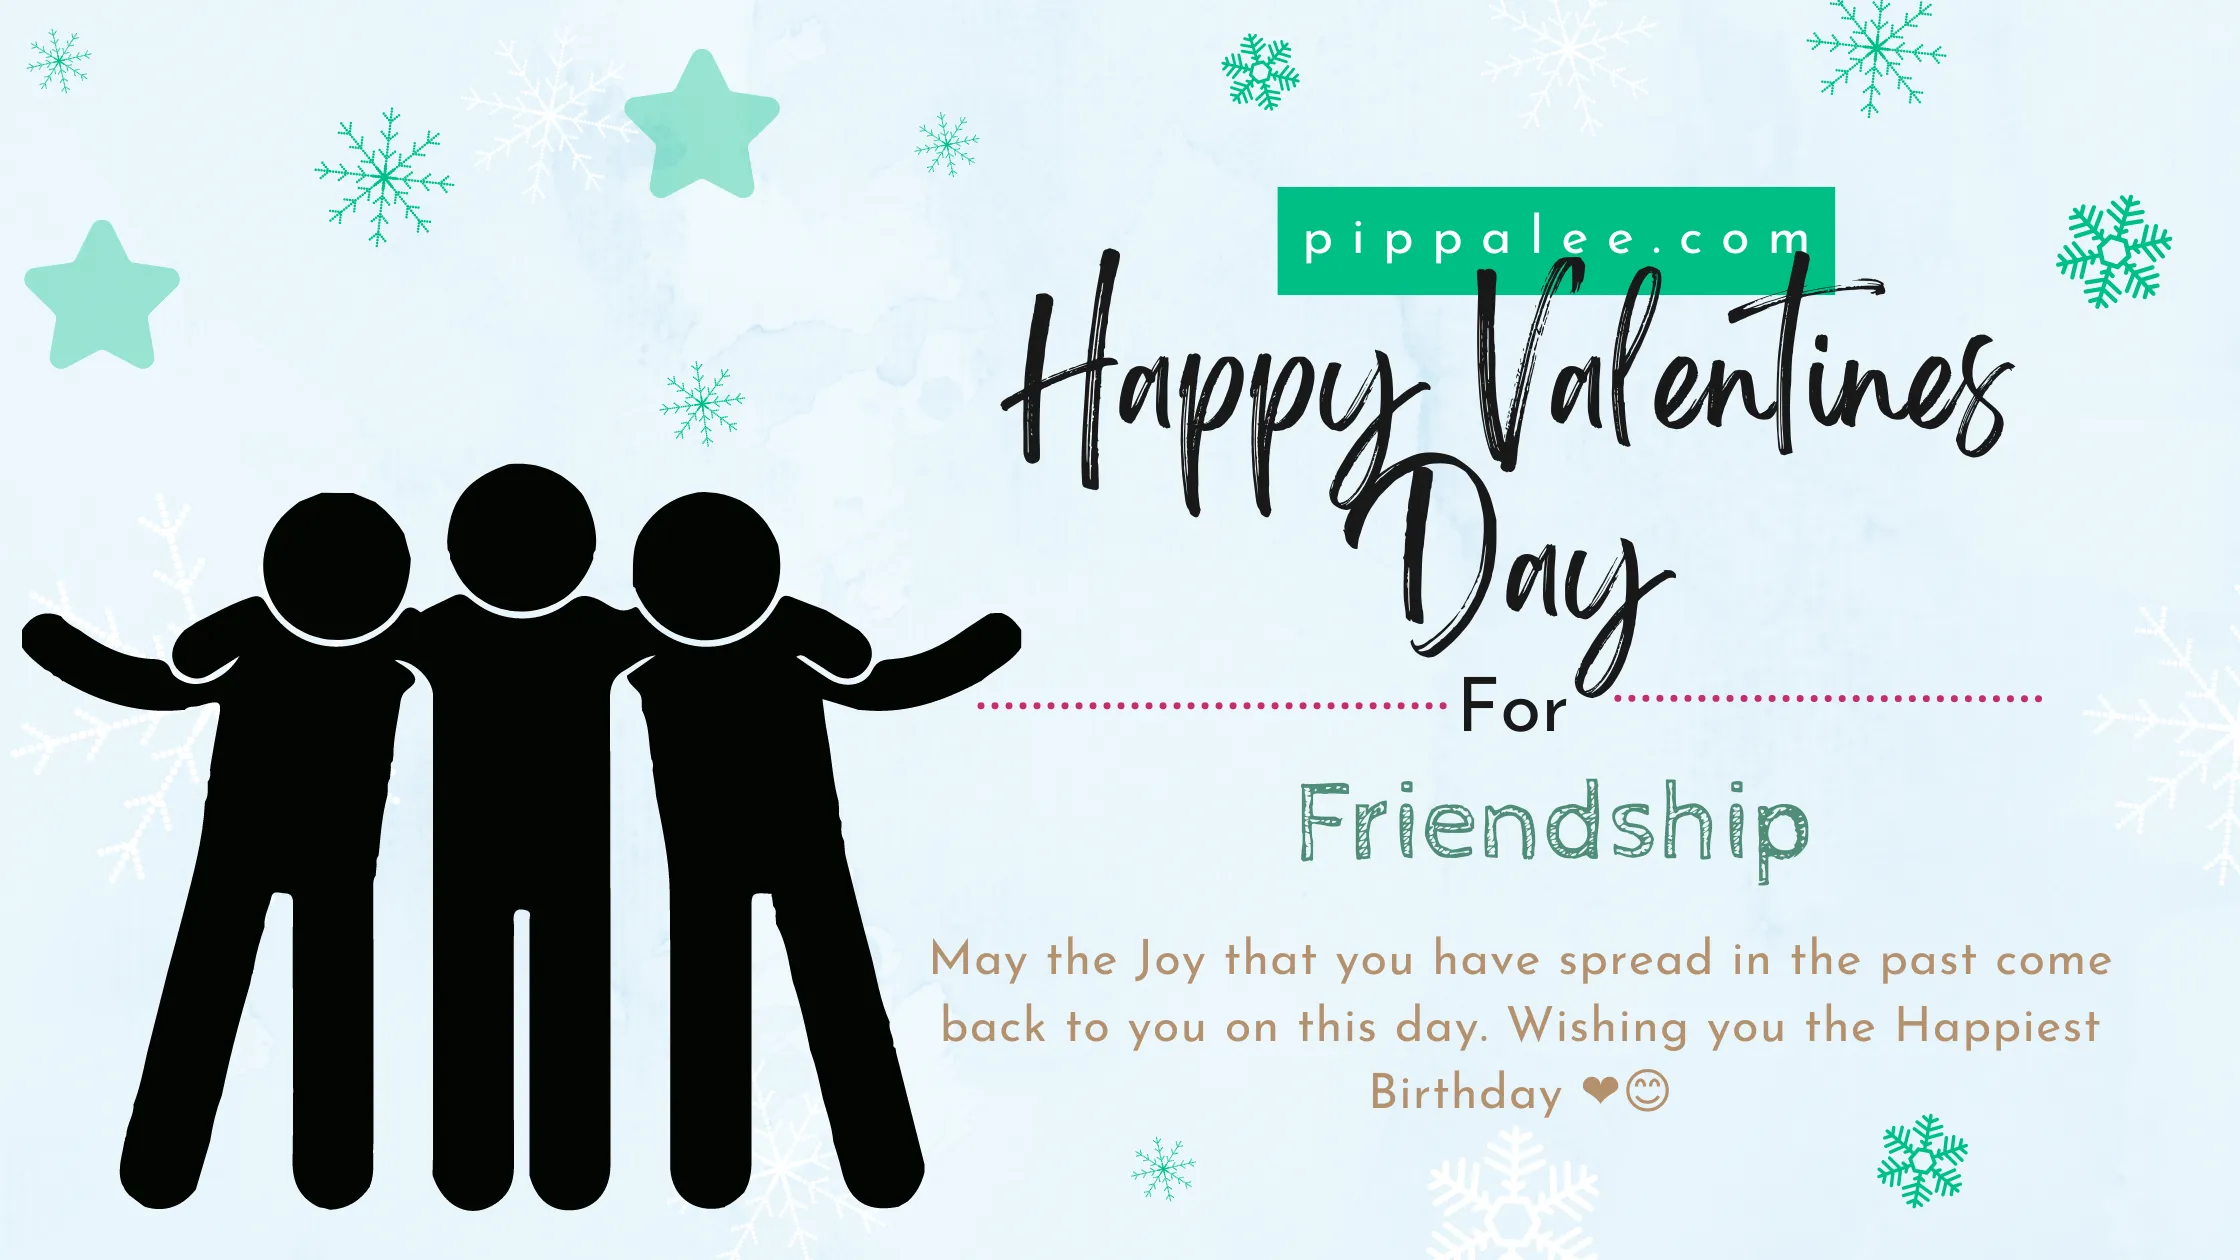 Happy Valentines Day Friendship - Wishes & Messages